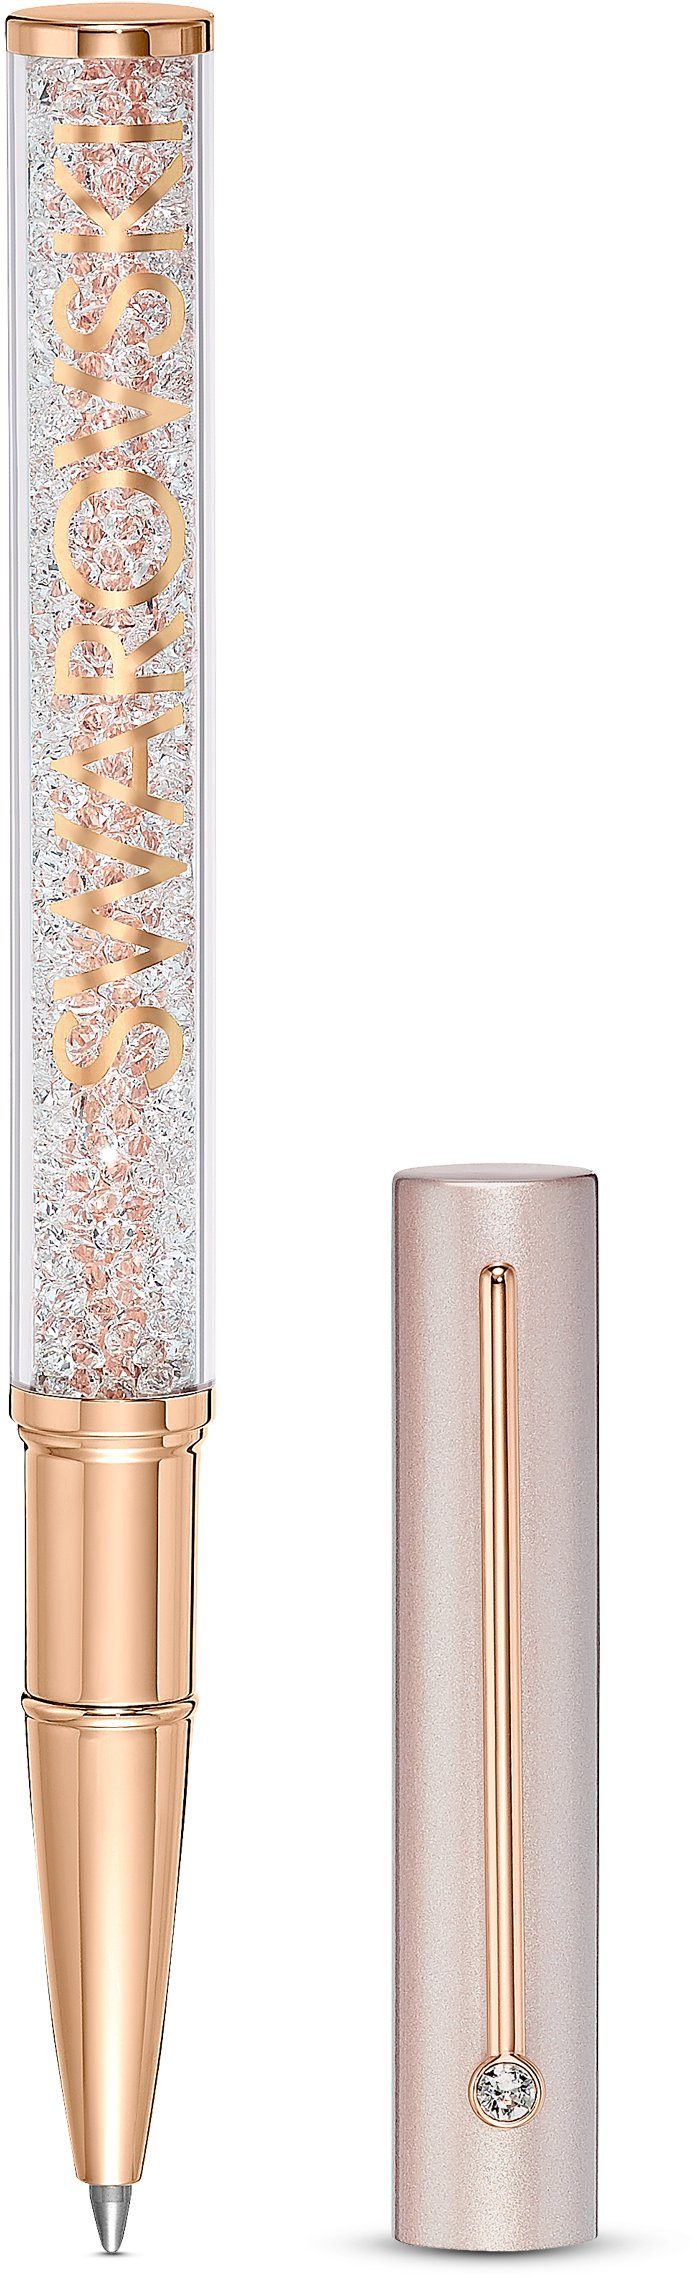 Swarovski Kugelschreiber Crystalline Gloss, rosa, Rosé vergoldet, 5568759,  Aus roségoldfarben vergoldetem Metall mit beschichtetem Kunststoff  kombiniert